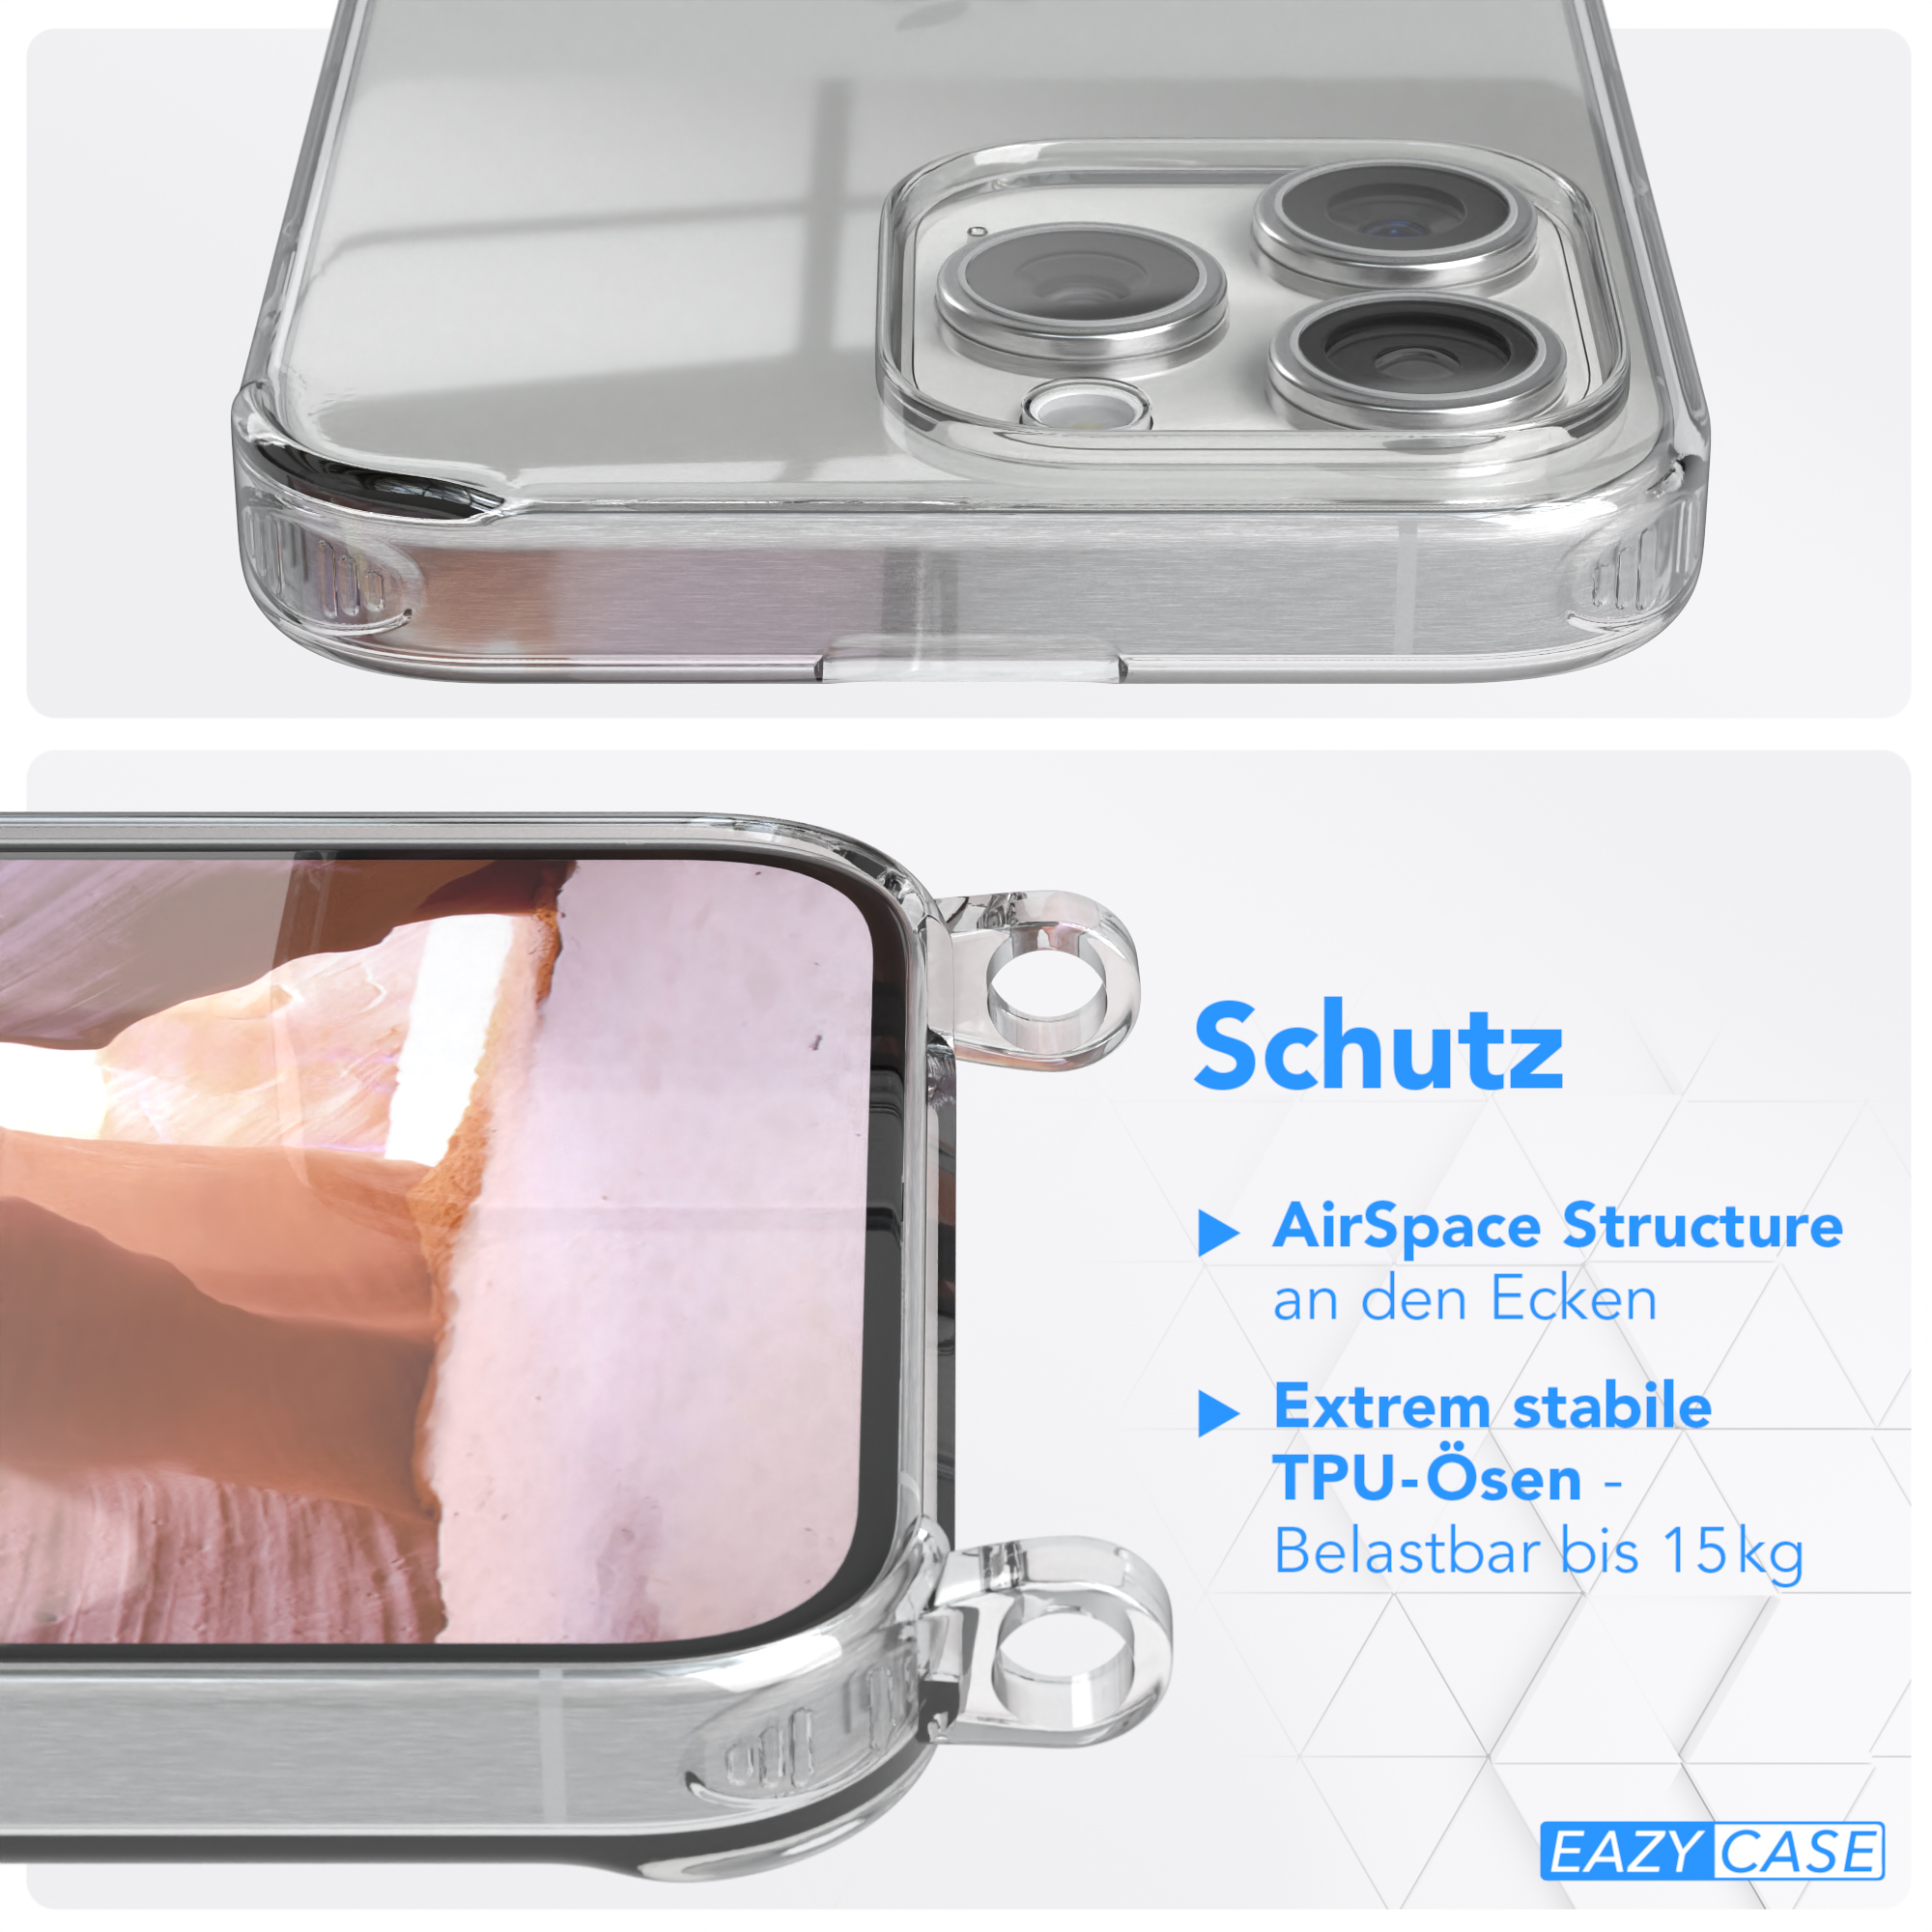 Umhängetasche, mit 15 Altrosa CASE Max, Gold Kordel / Transparente runder Pro EAZY iPhone + Karabiner, Apple, Handyhülle